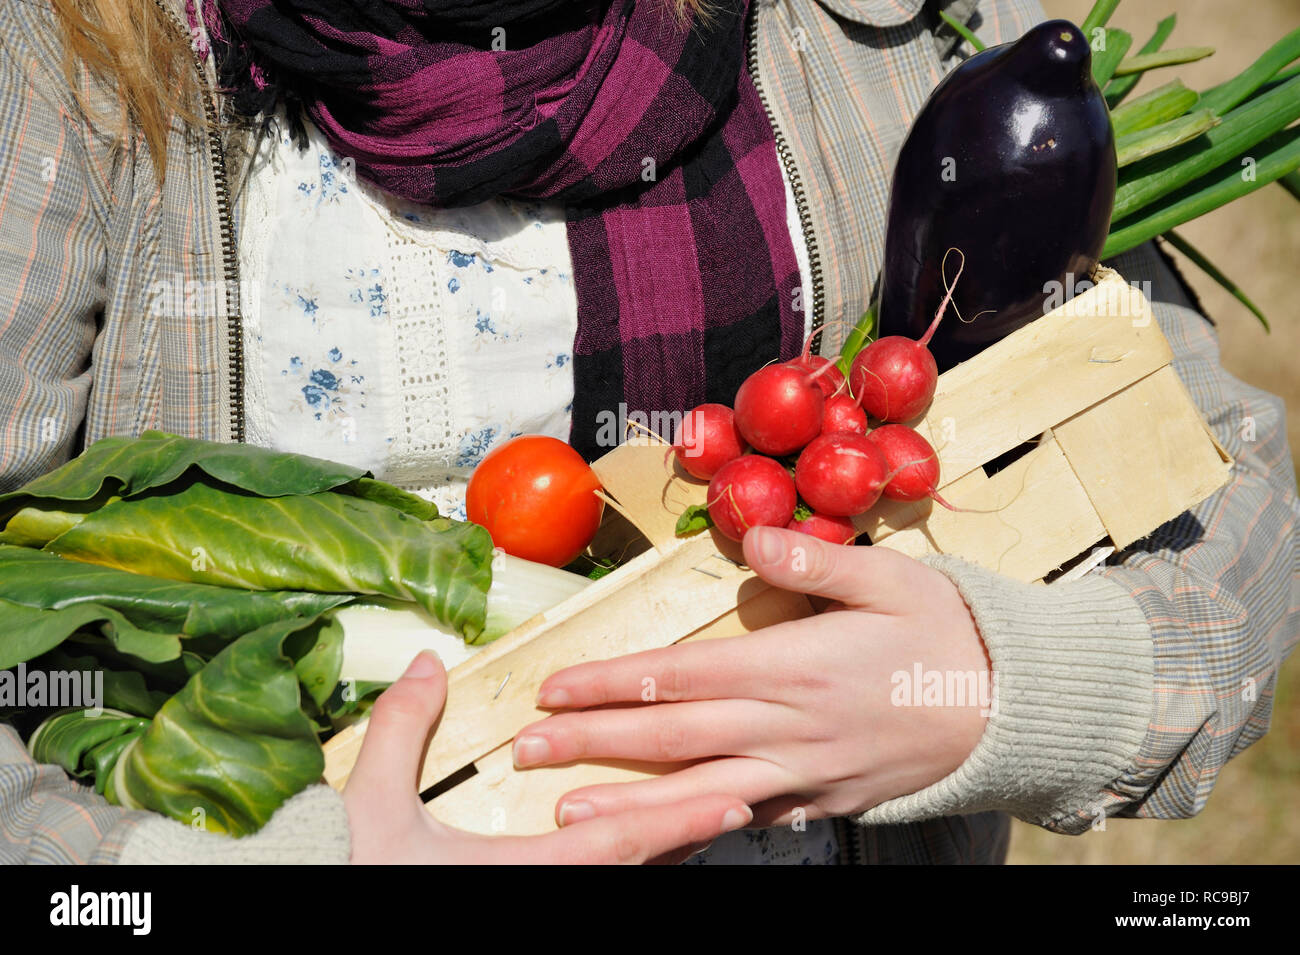 Junge Frau mit im Gemüsekorb Arm - junges Gemüse | Mujeres jóvenes con cesta de verduras Foto de stock